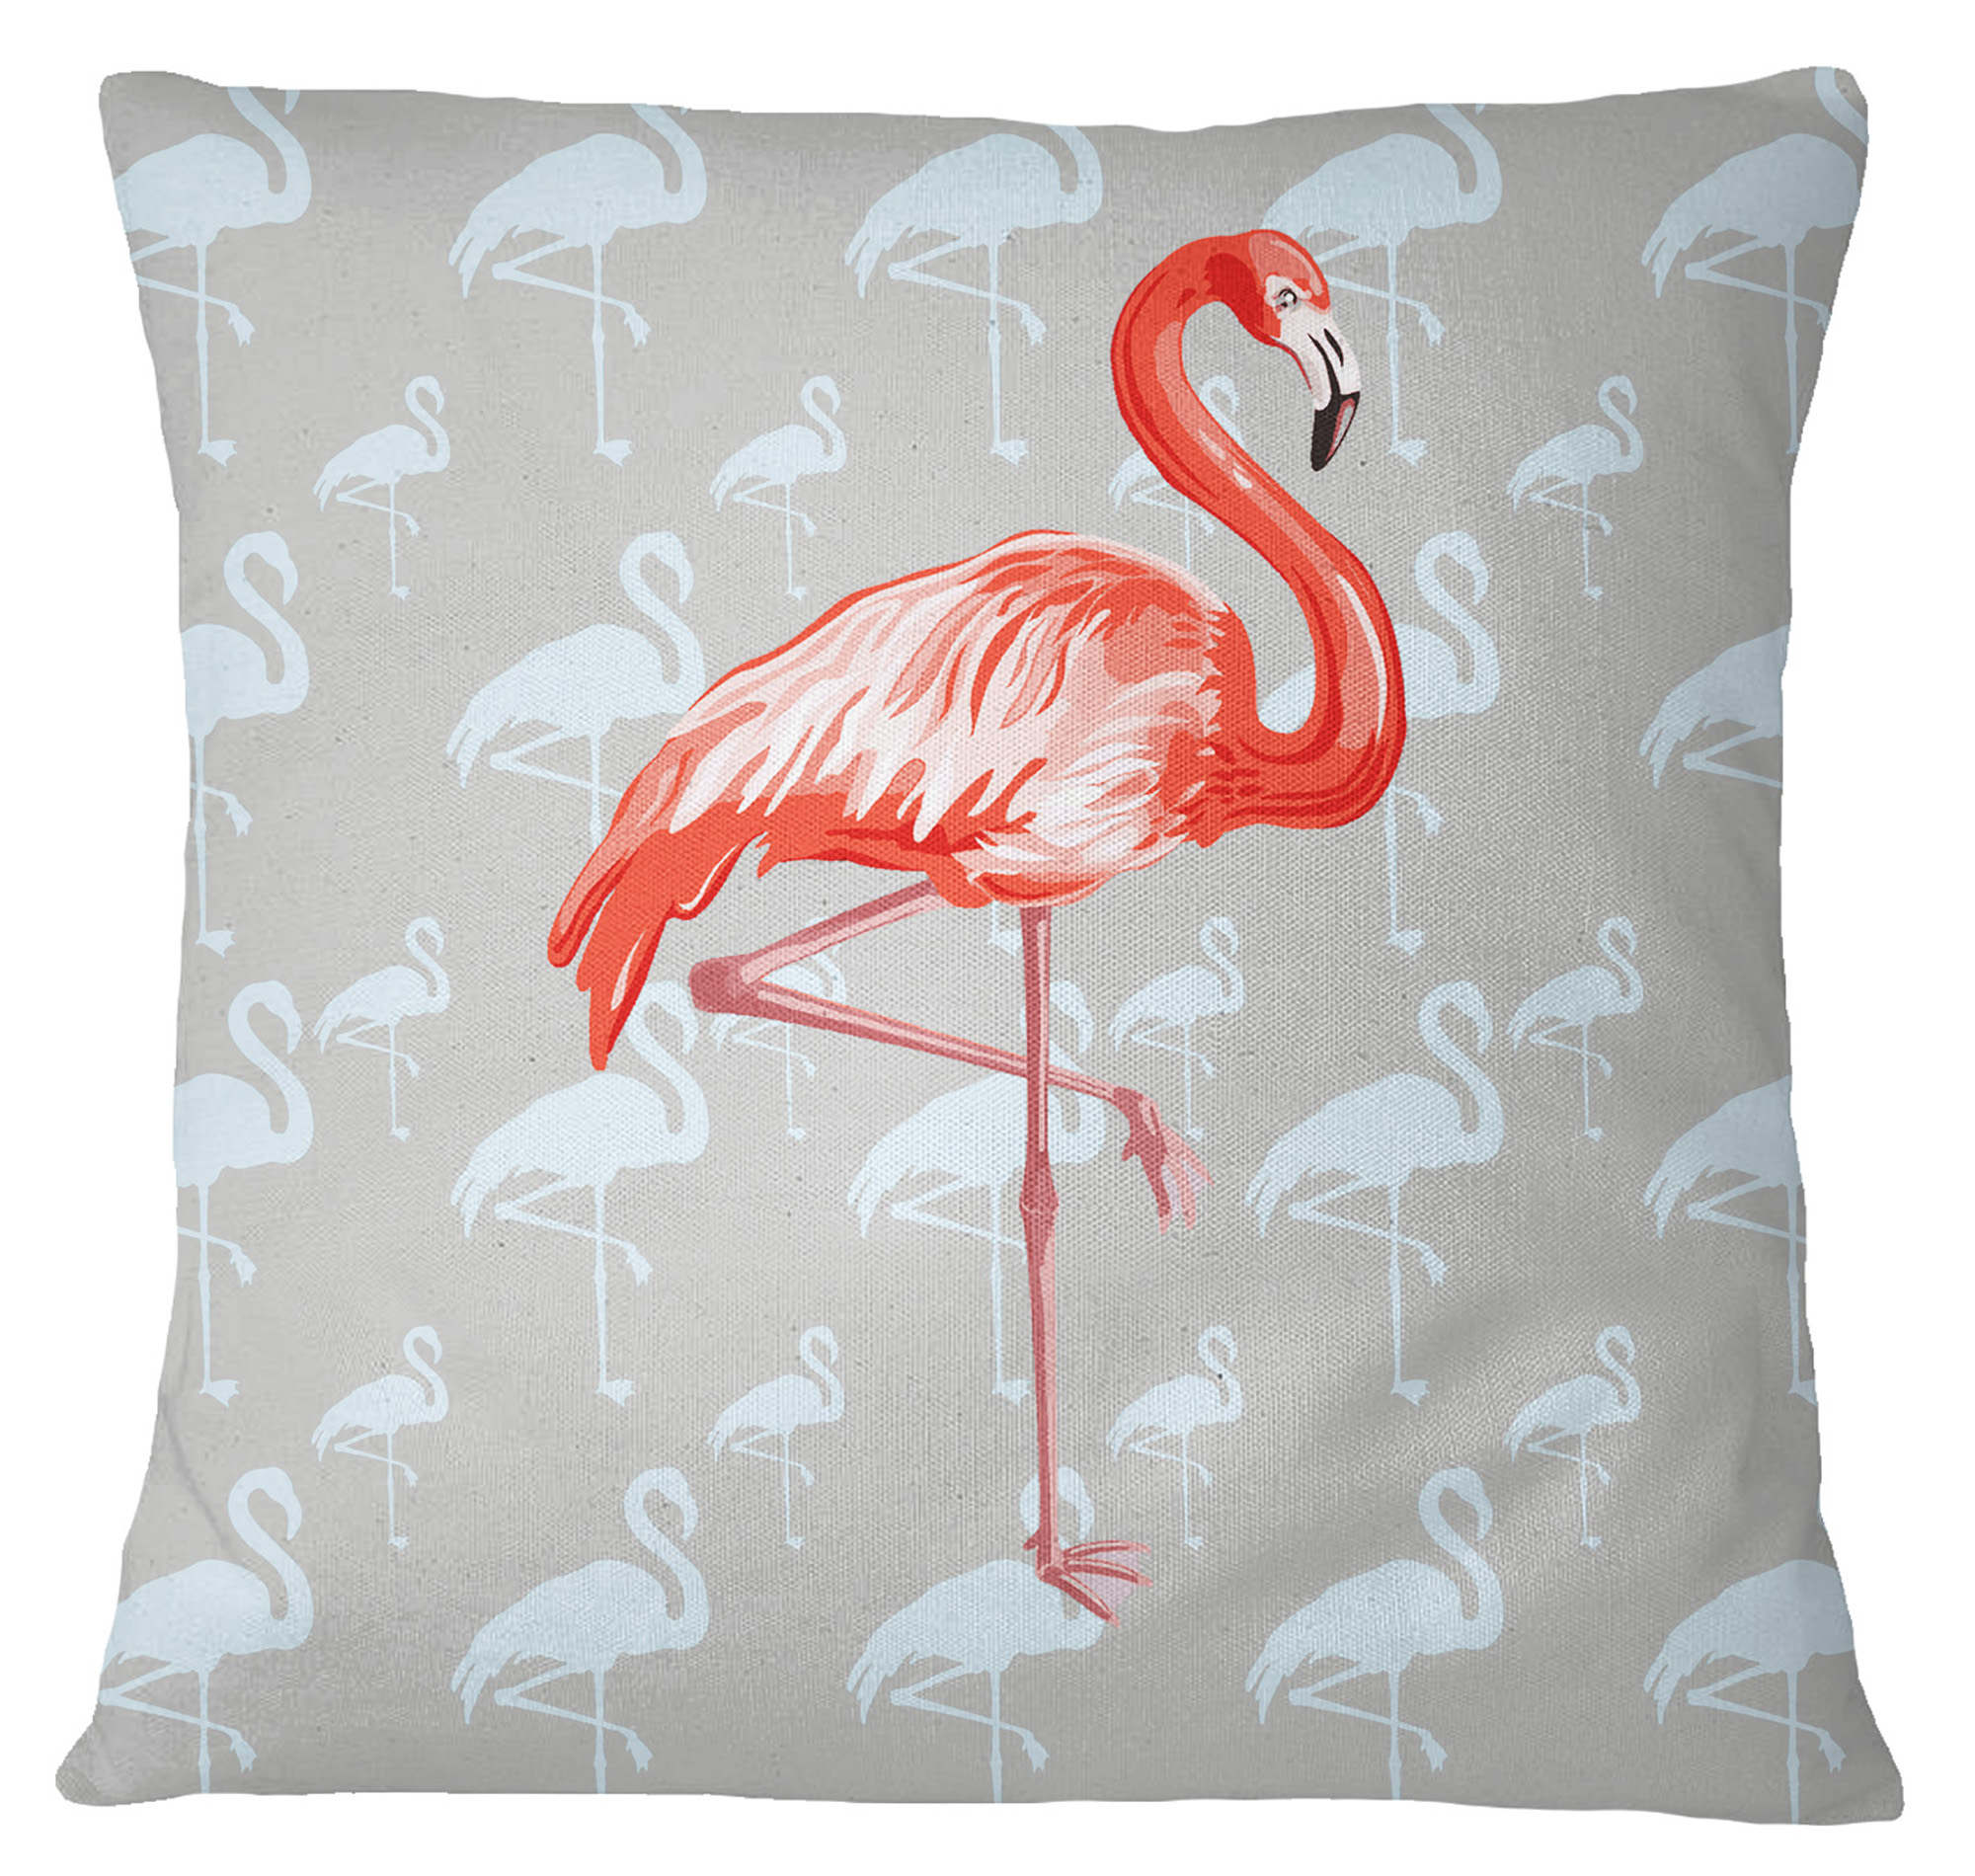 S4Sassy Decorative Flamingo Floral Print Pillow Case Square Cushion Cover Throw